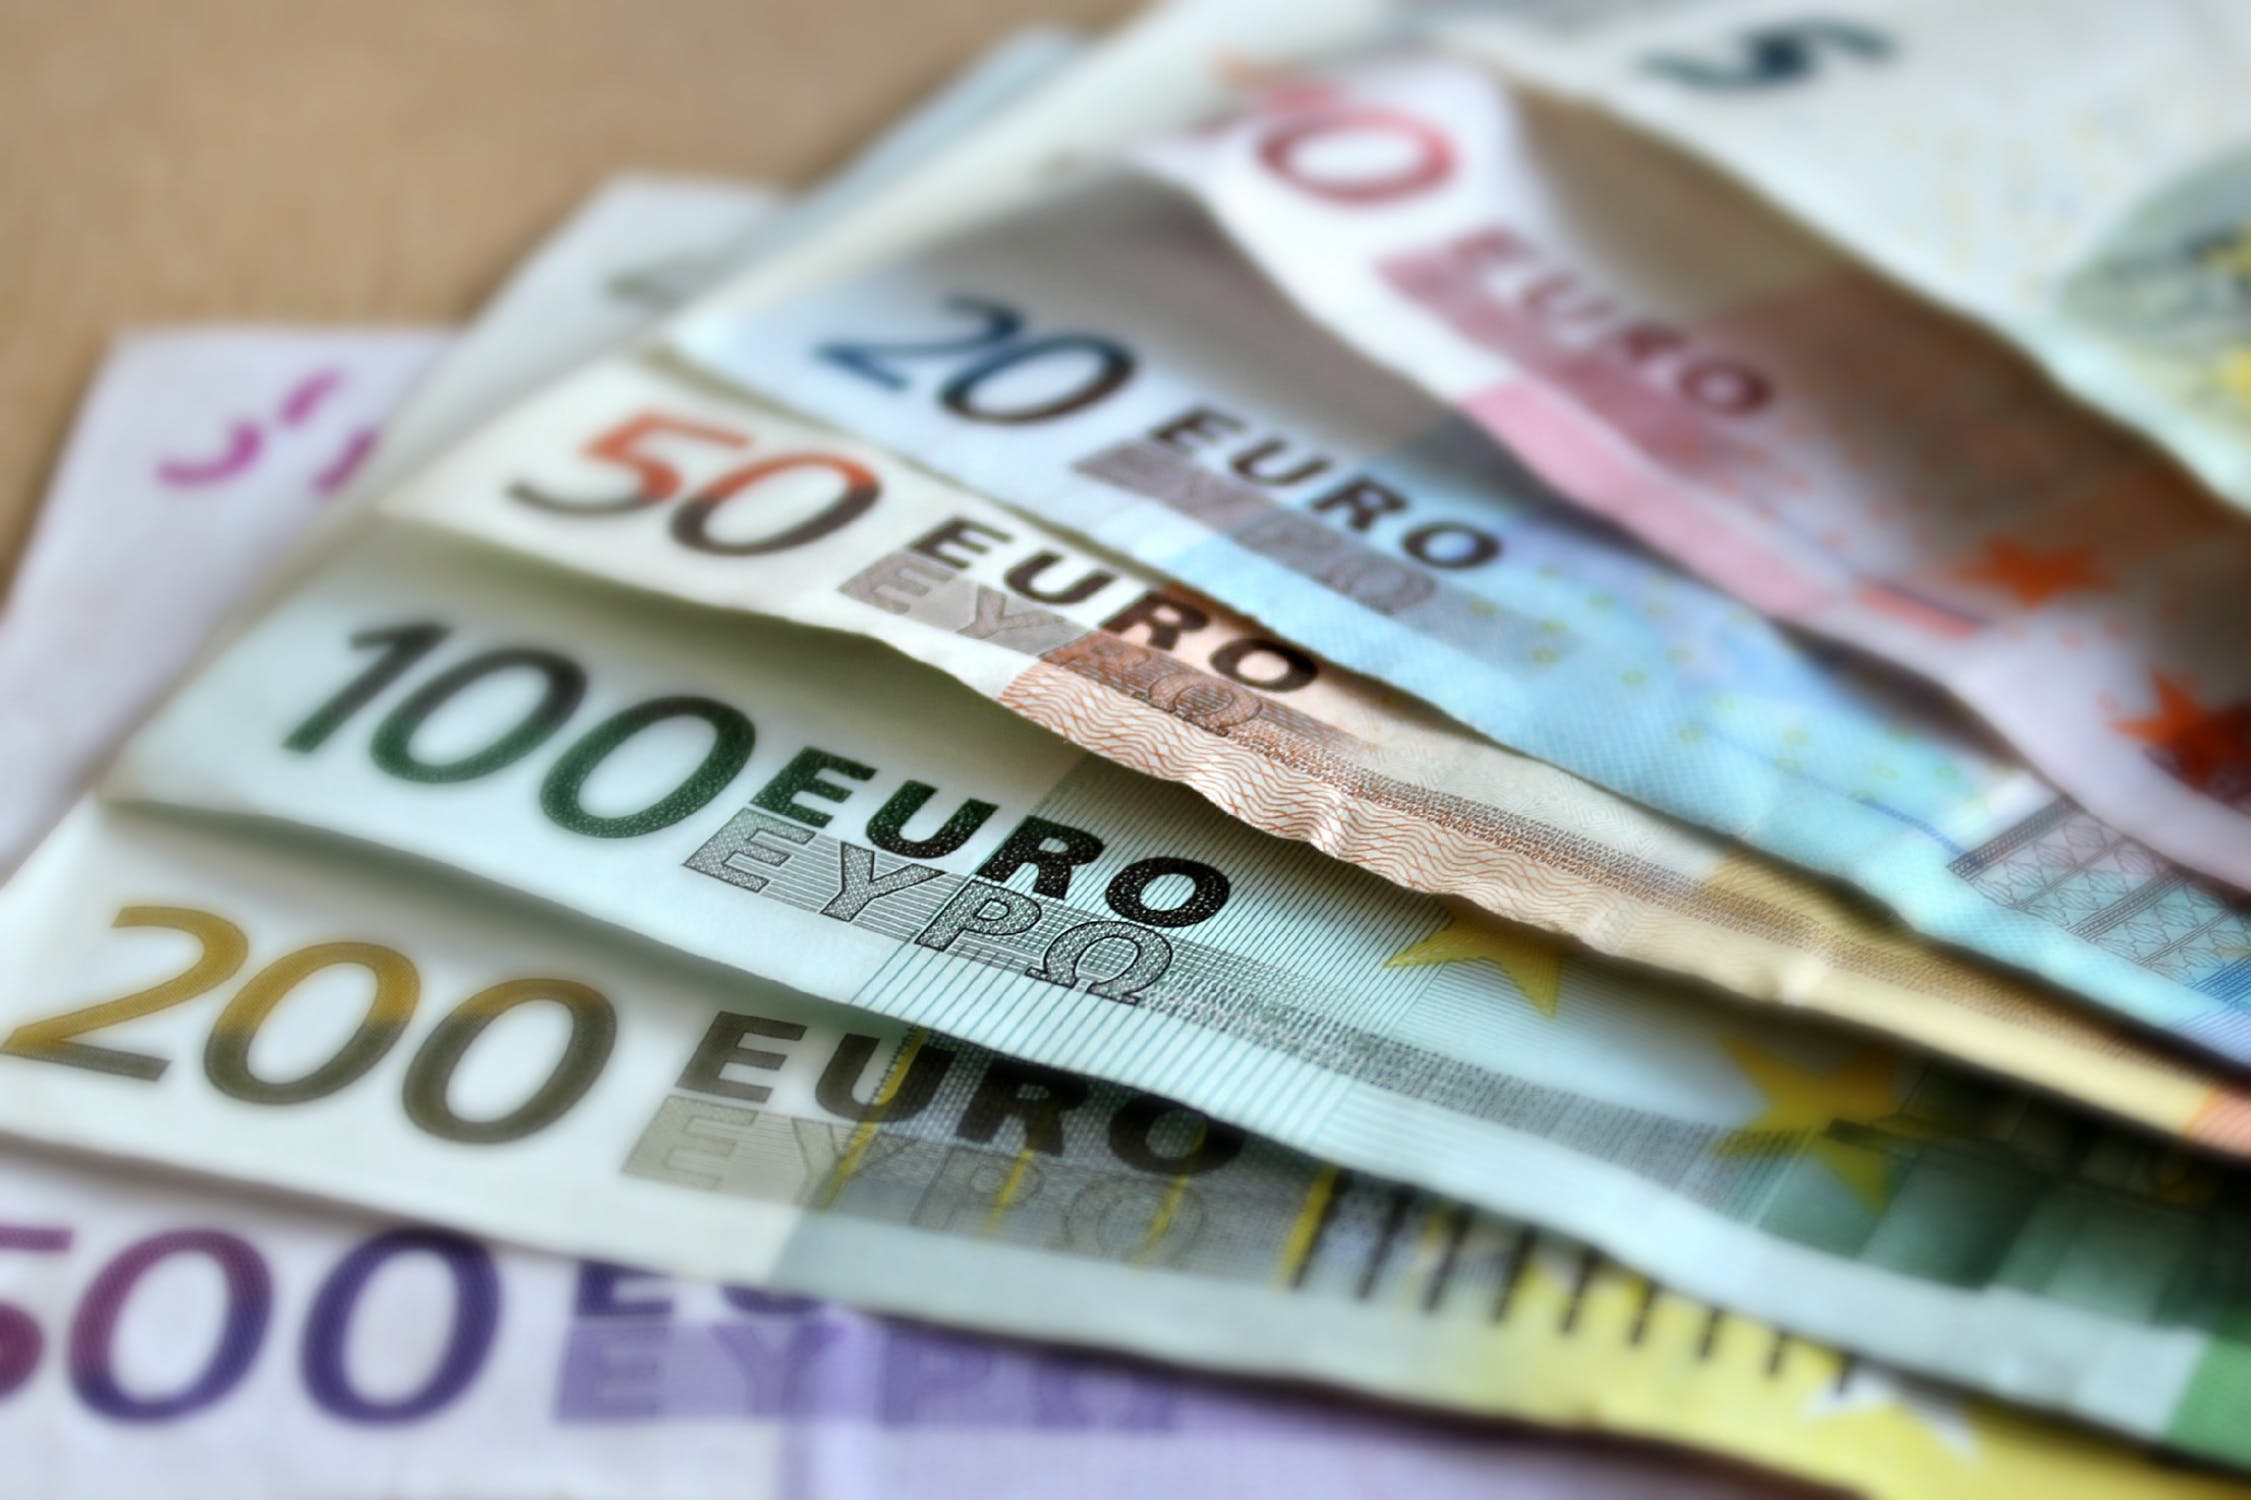 bank-note-euro-bills-paper-money-63635